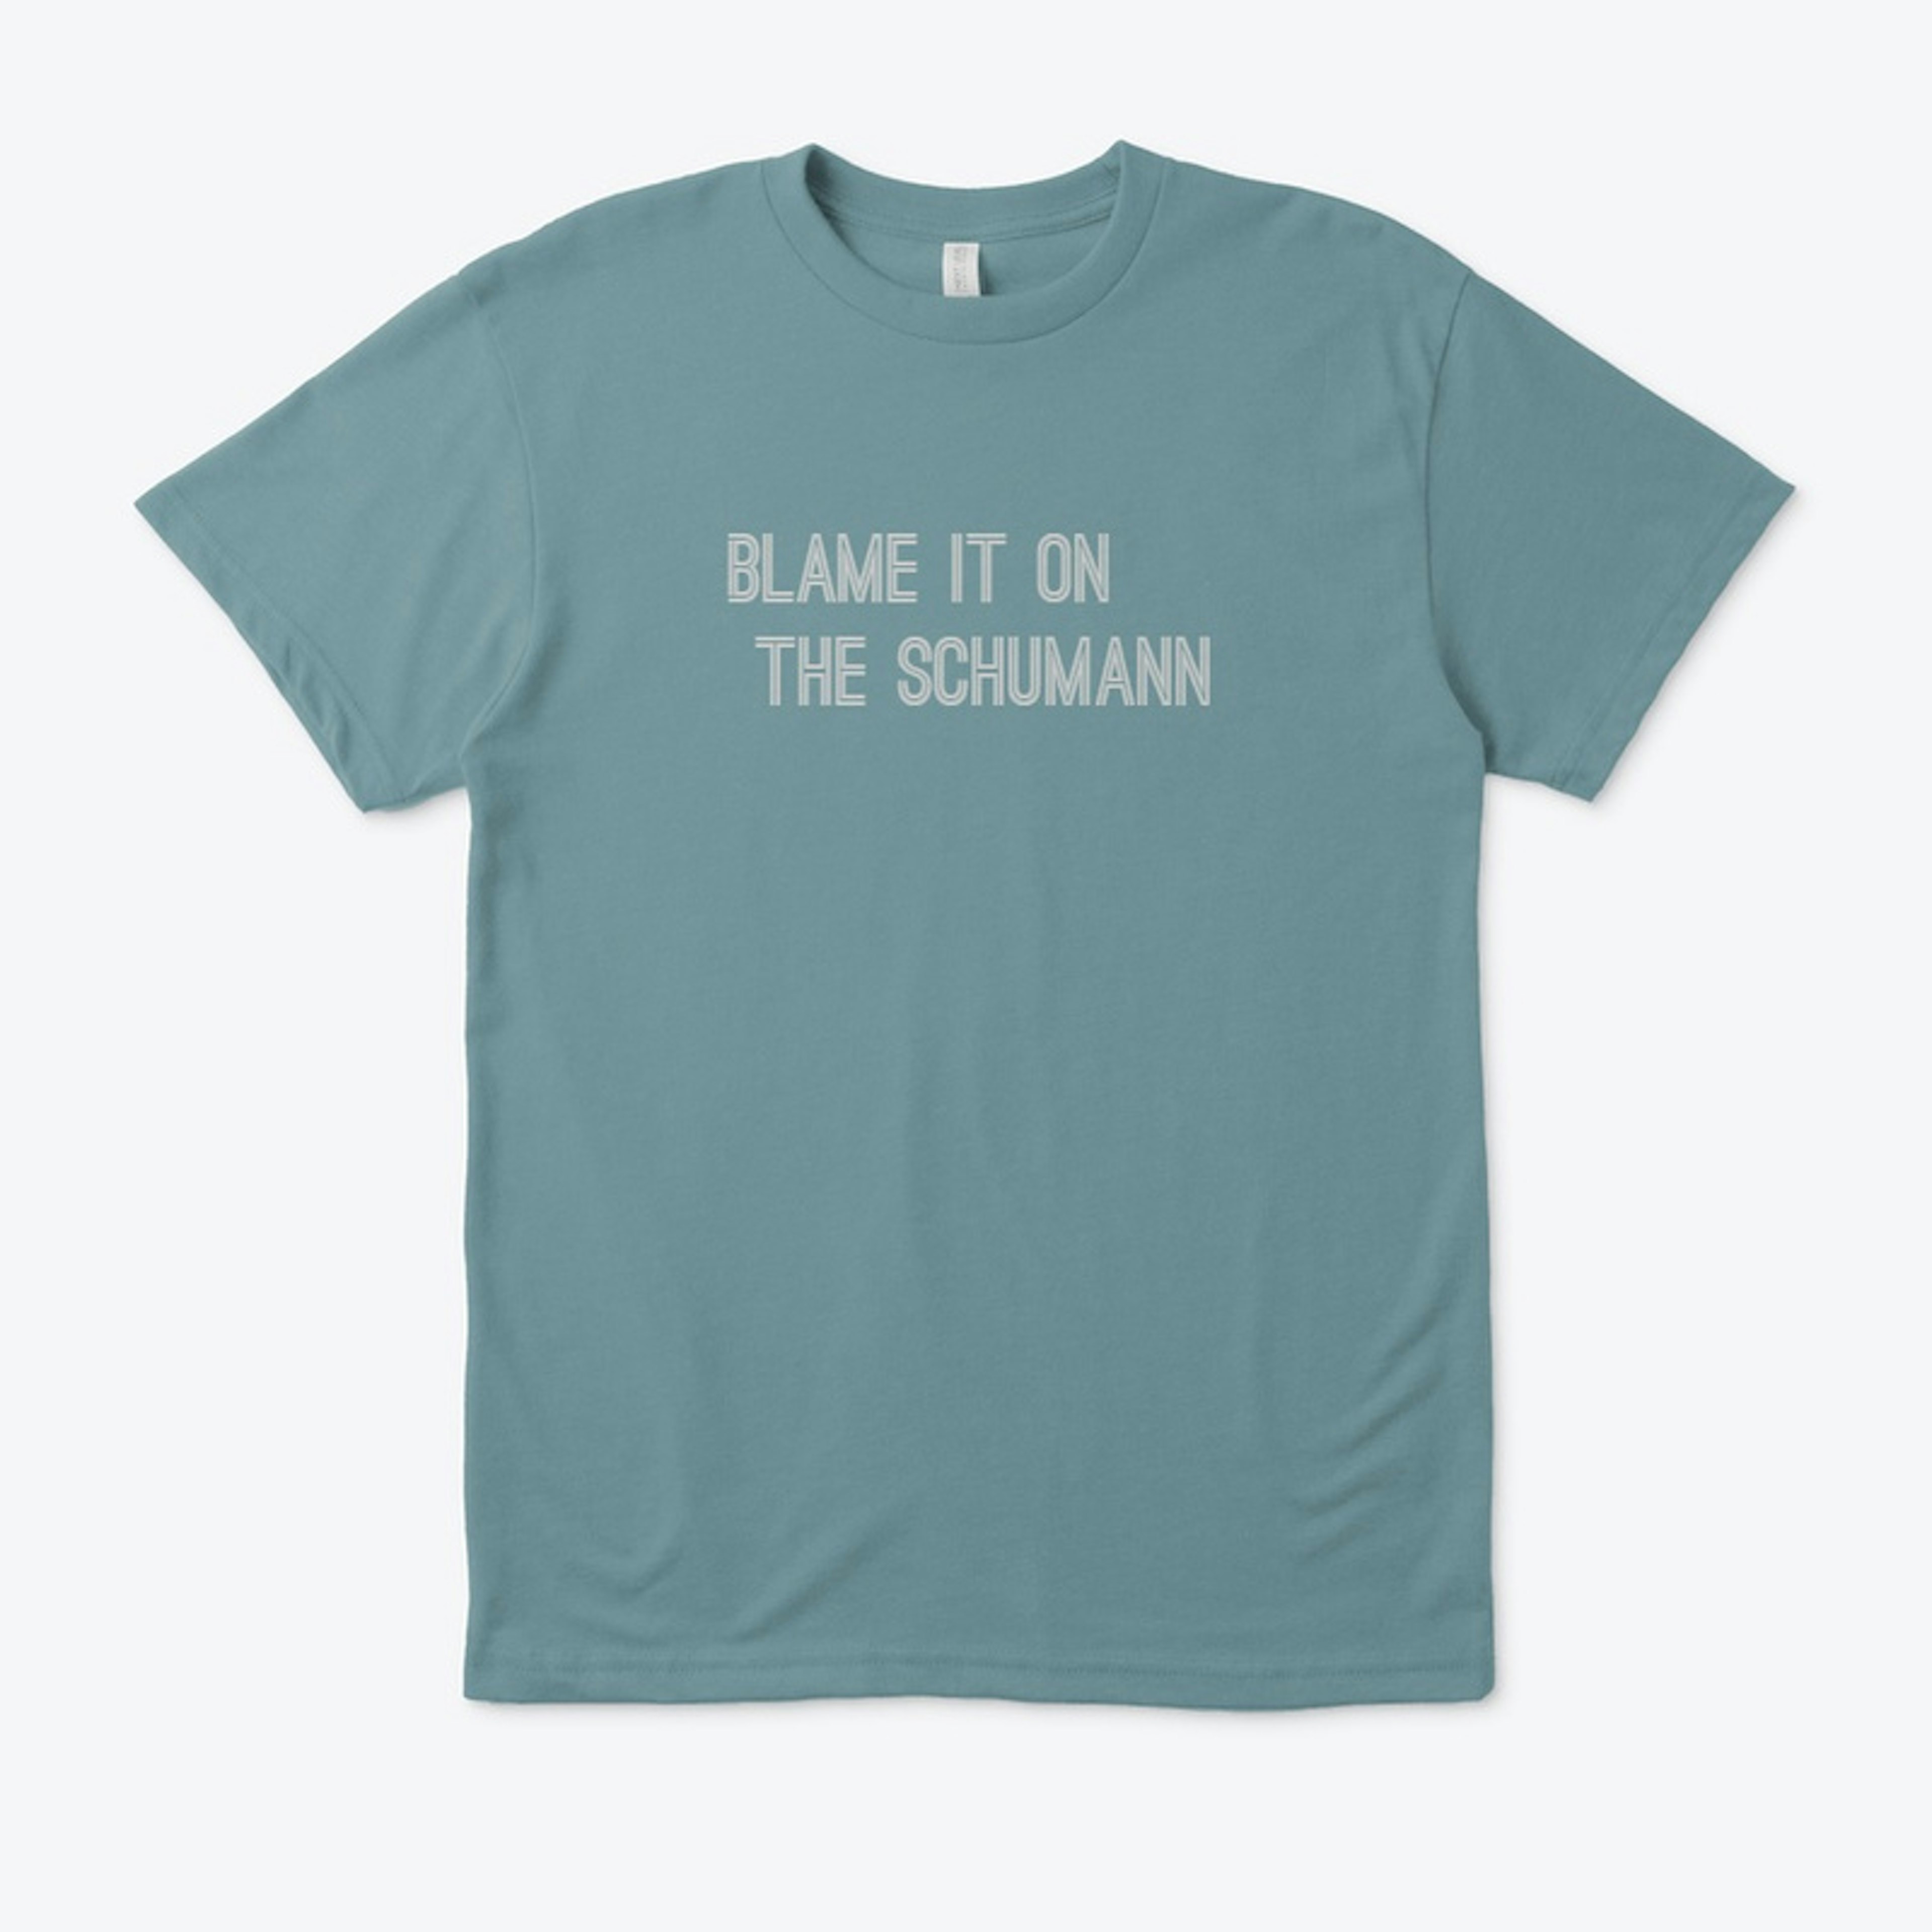 Blame it on the Schumann